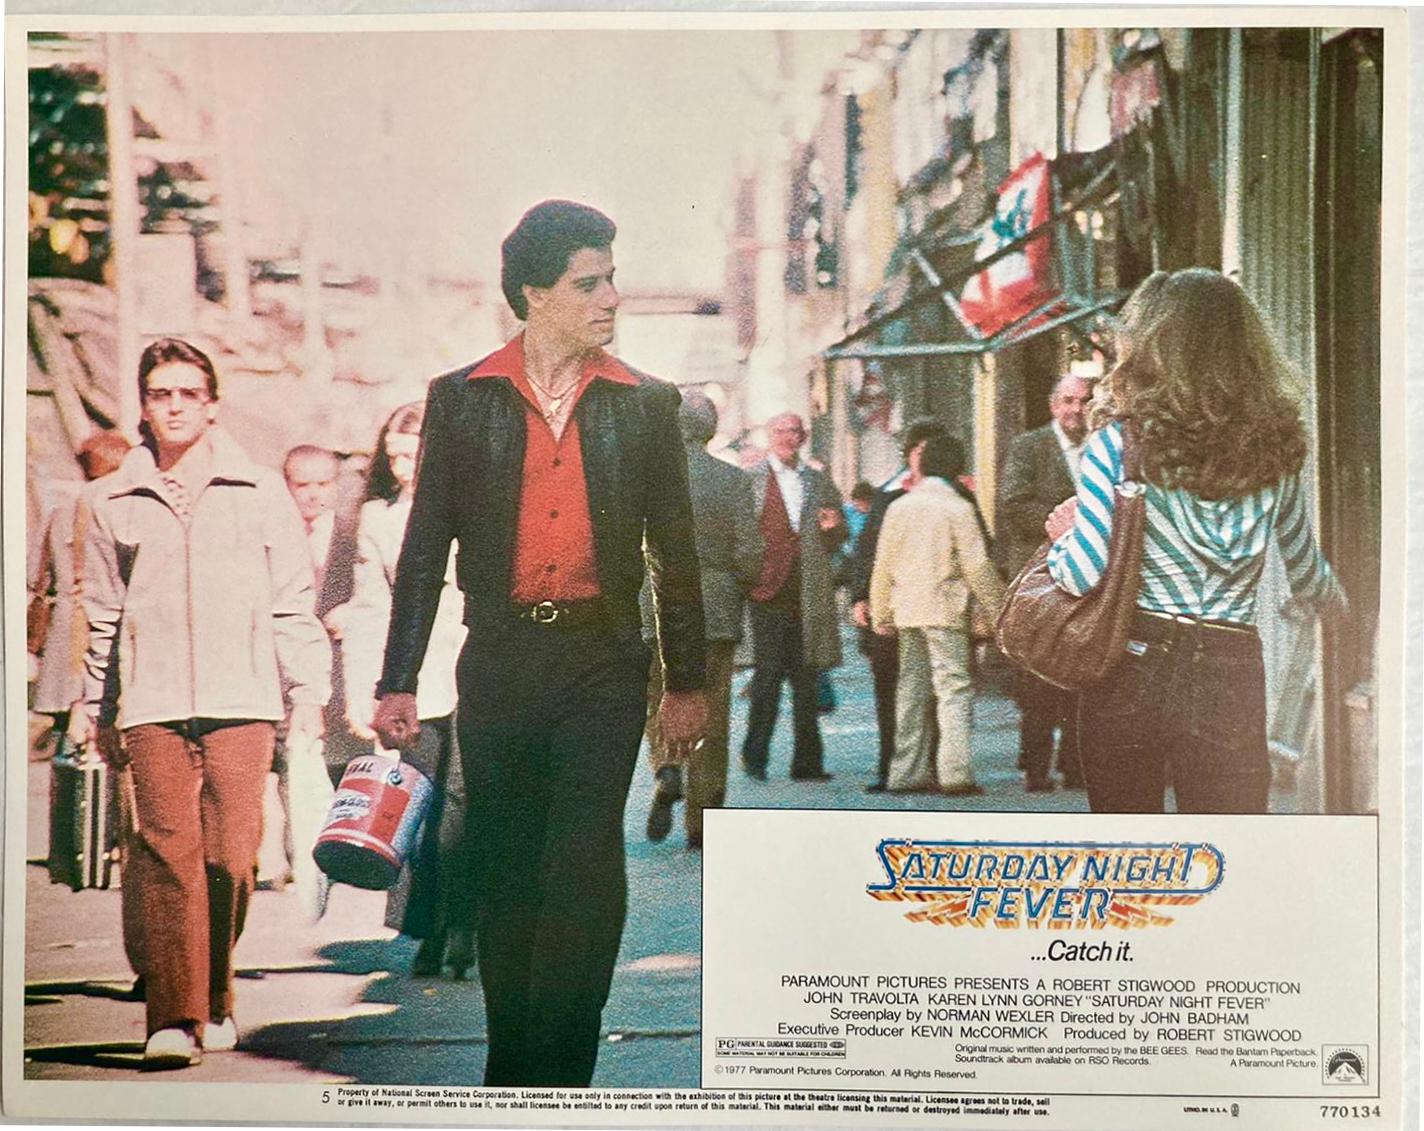 Unknown Print - "Saturday Night Fever" Original Vintage 1977 Movie Film Cinema Lobby Card 